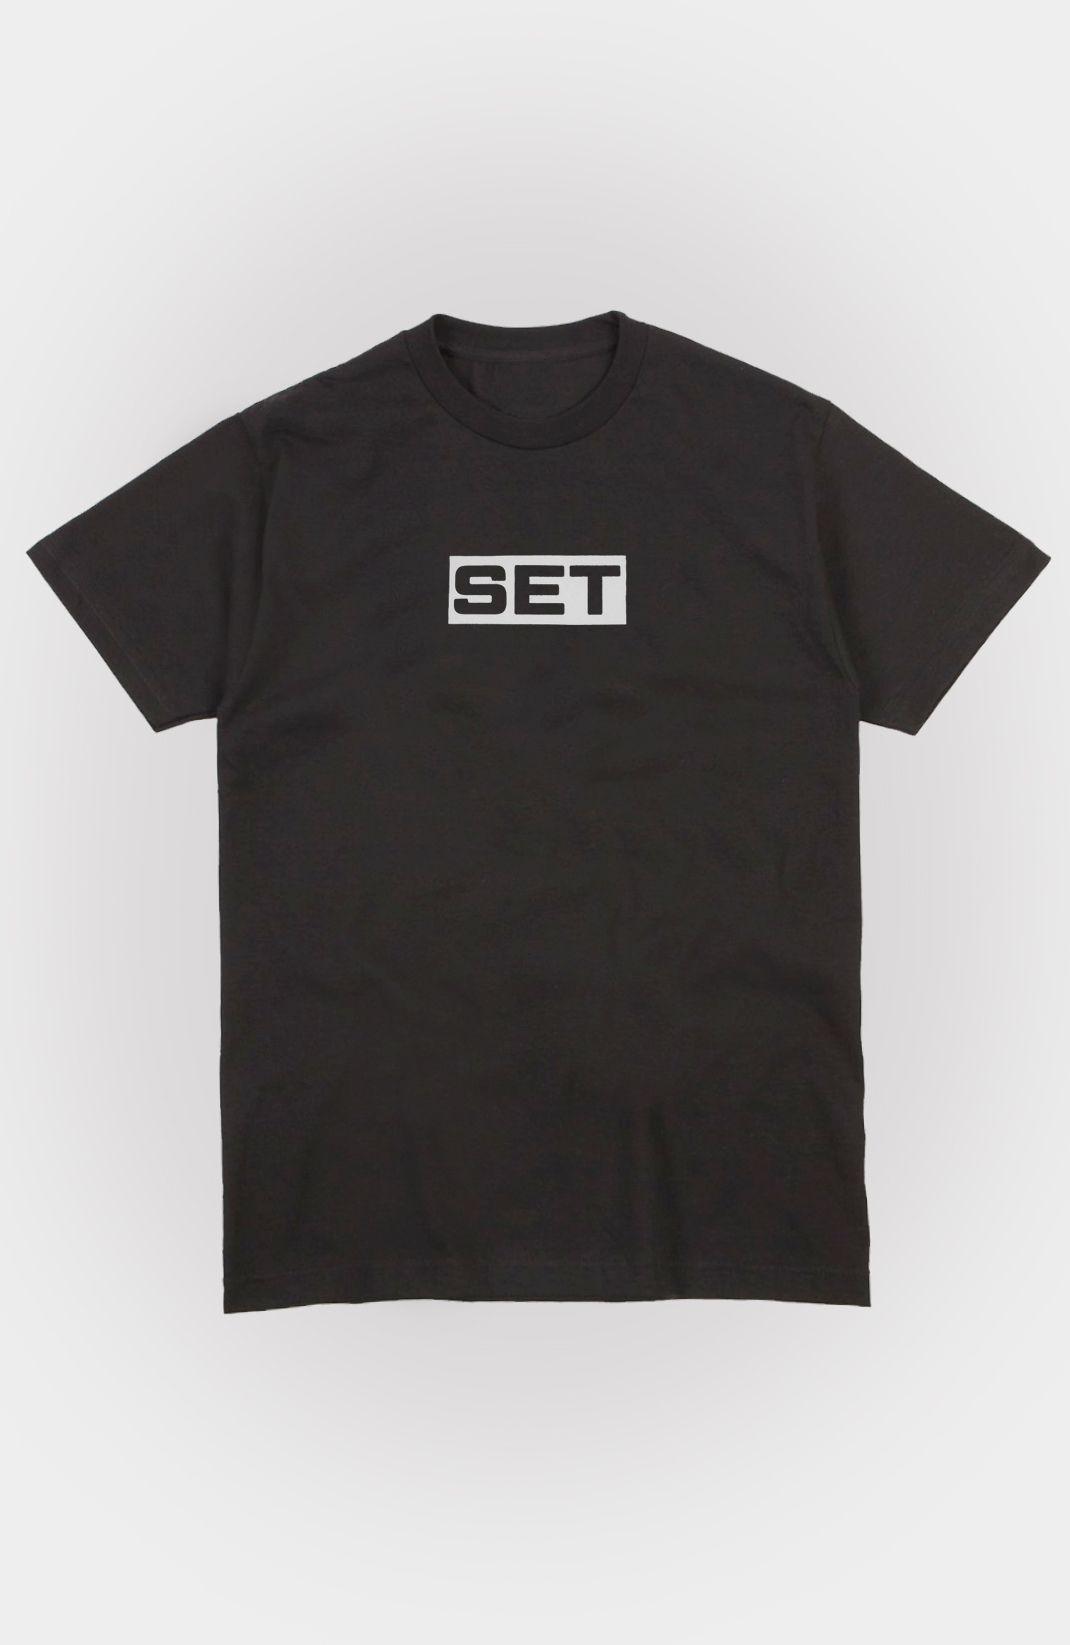 Gray Bar Logo - SET Bar Logo Tshirt - Black exclusive to Set Store Clothing